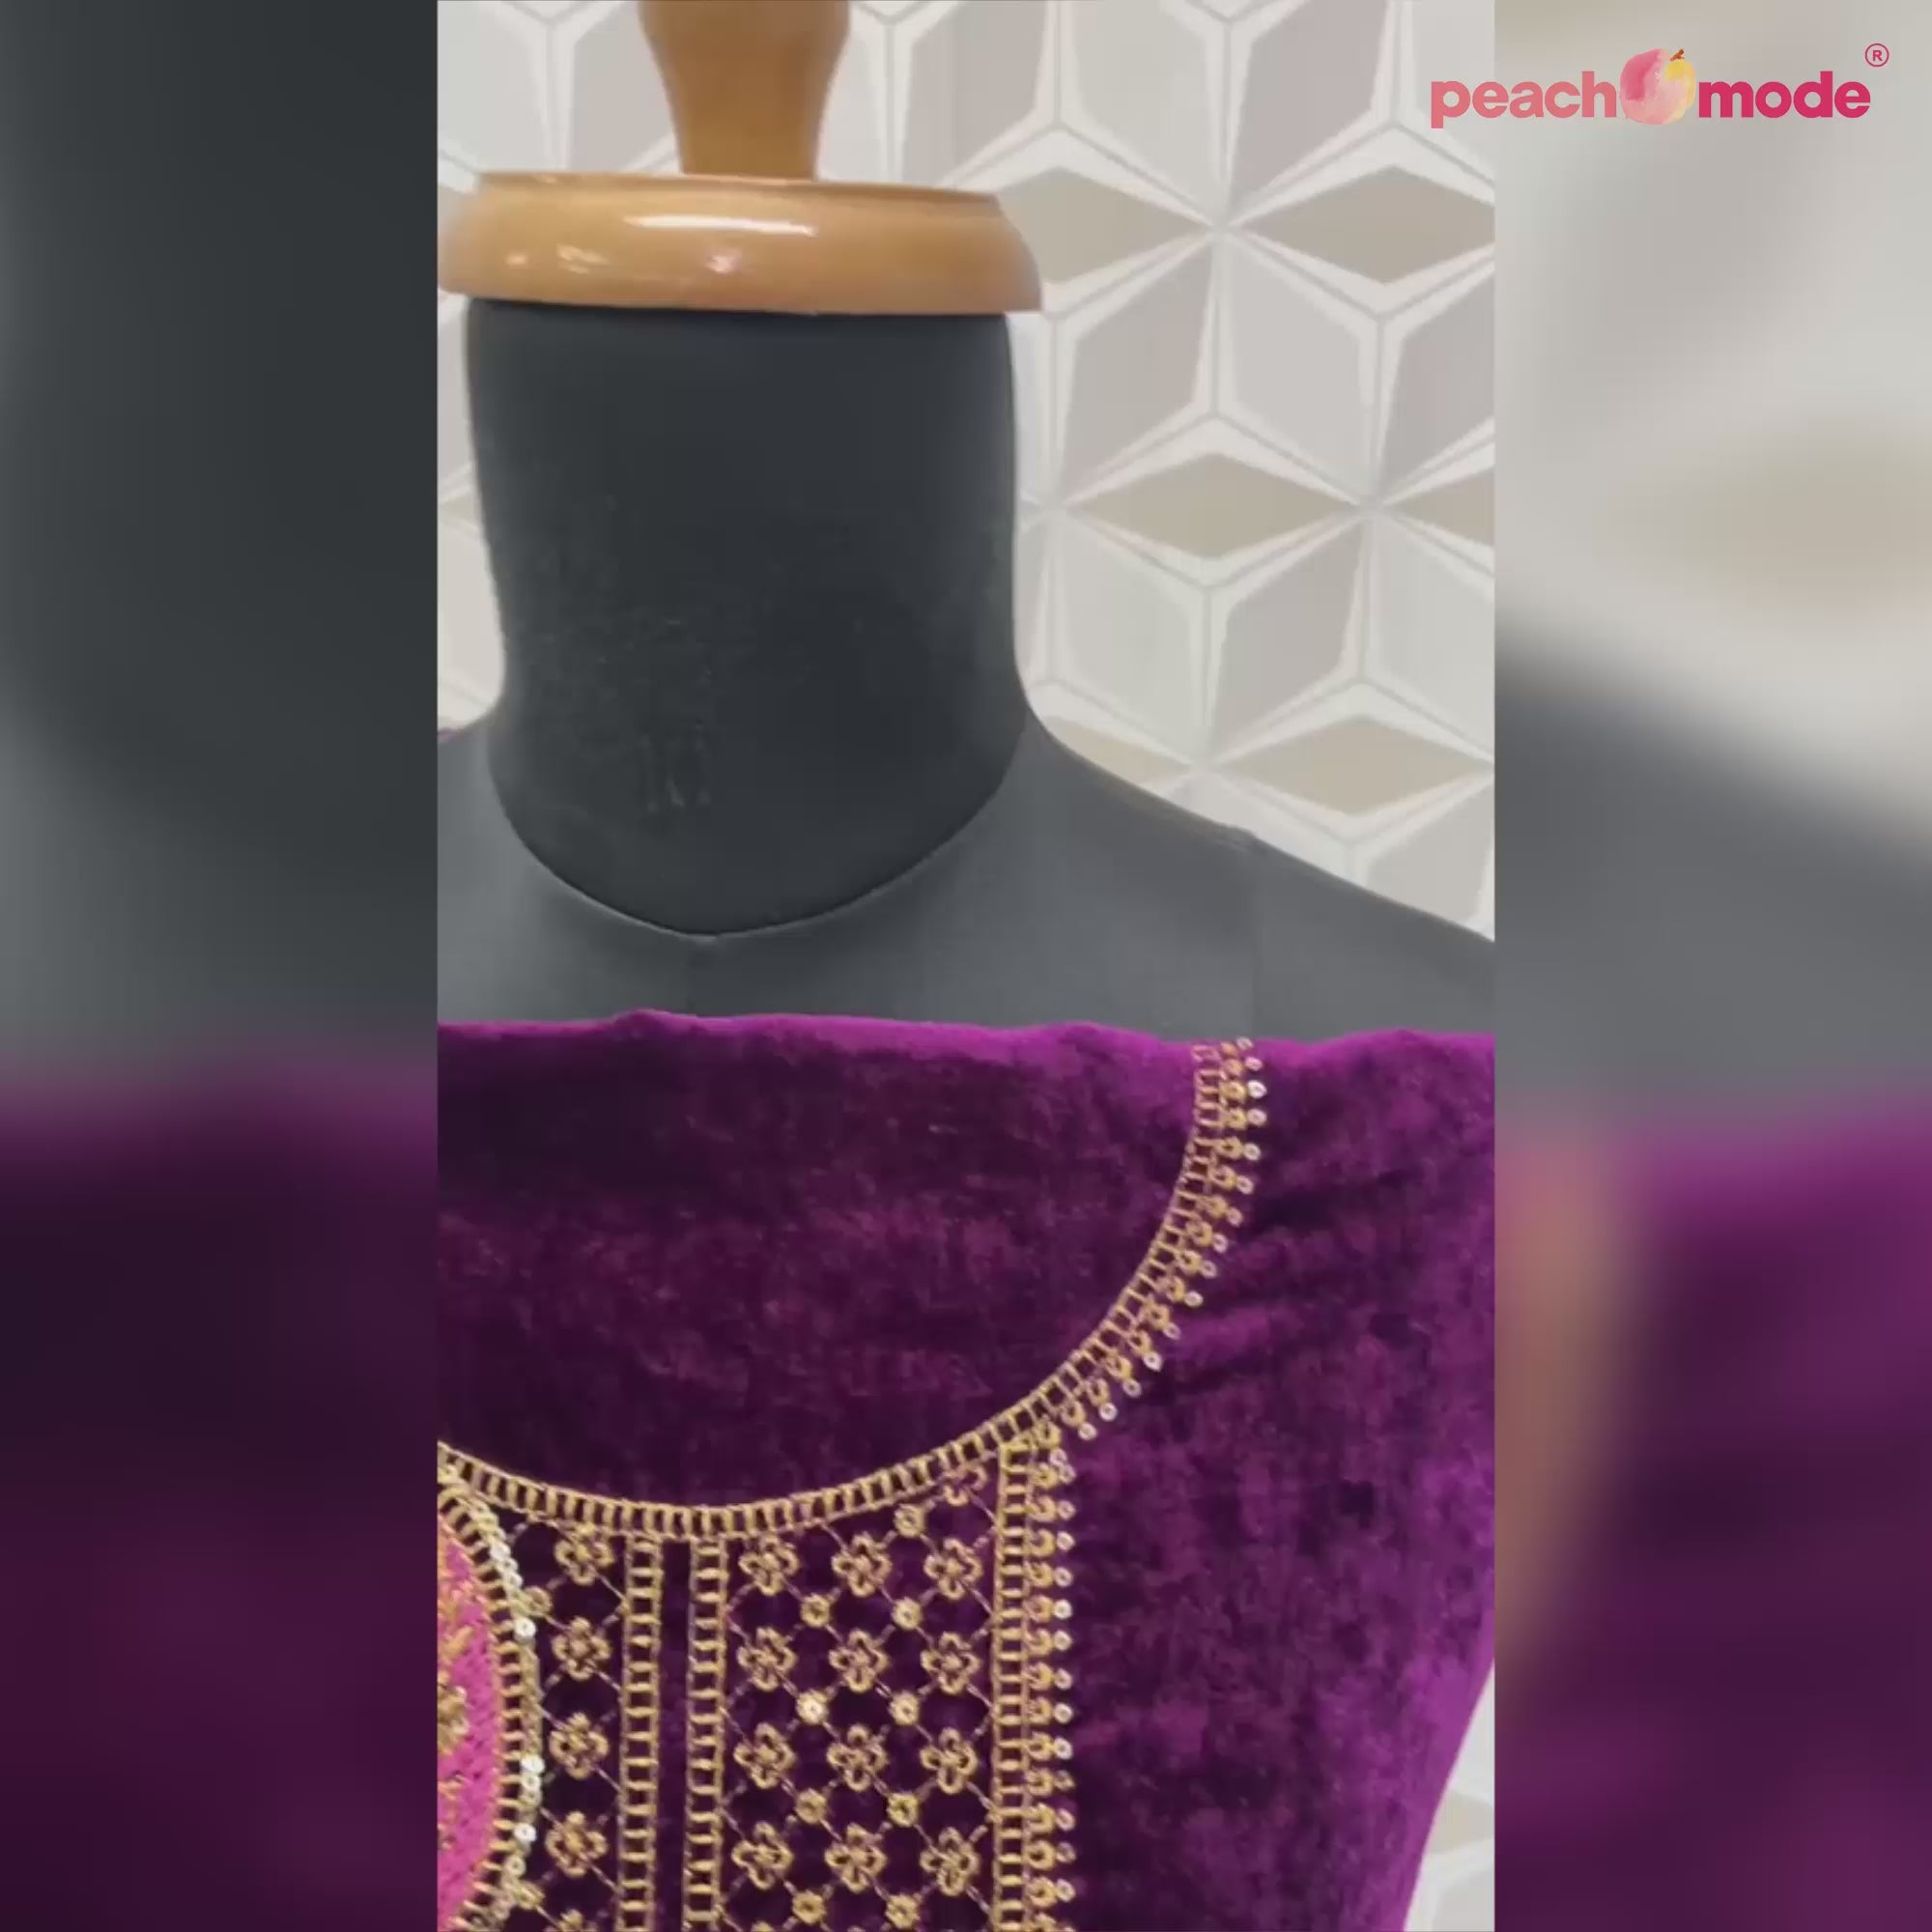 Purple Floral Embroidered Velvet Semi Stitched Salwar Suit